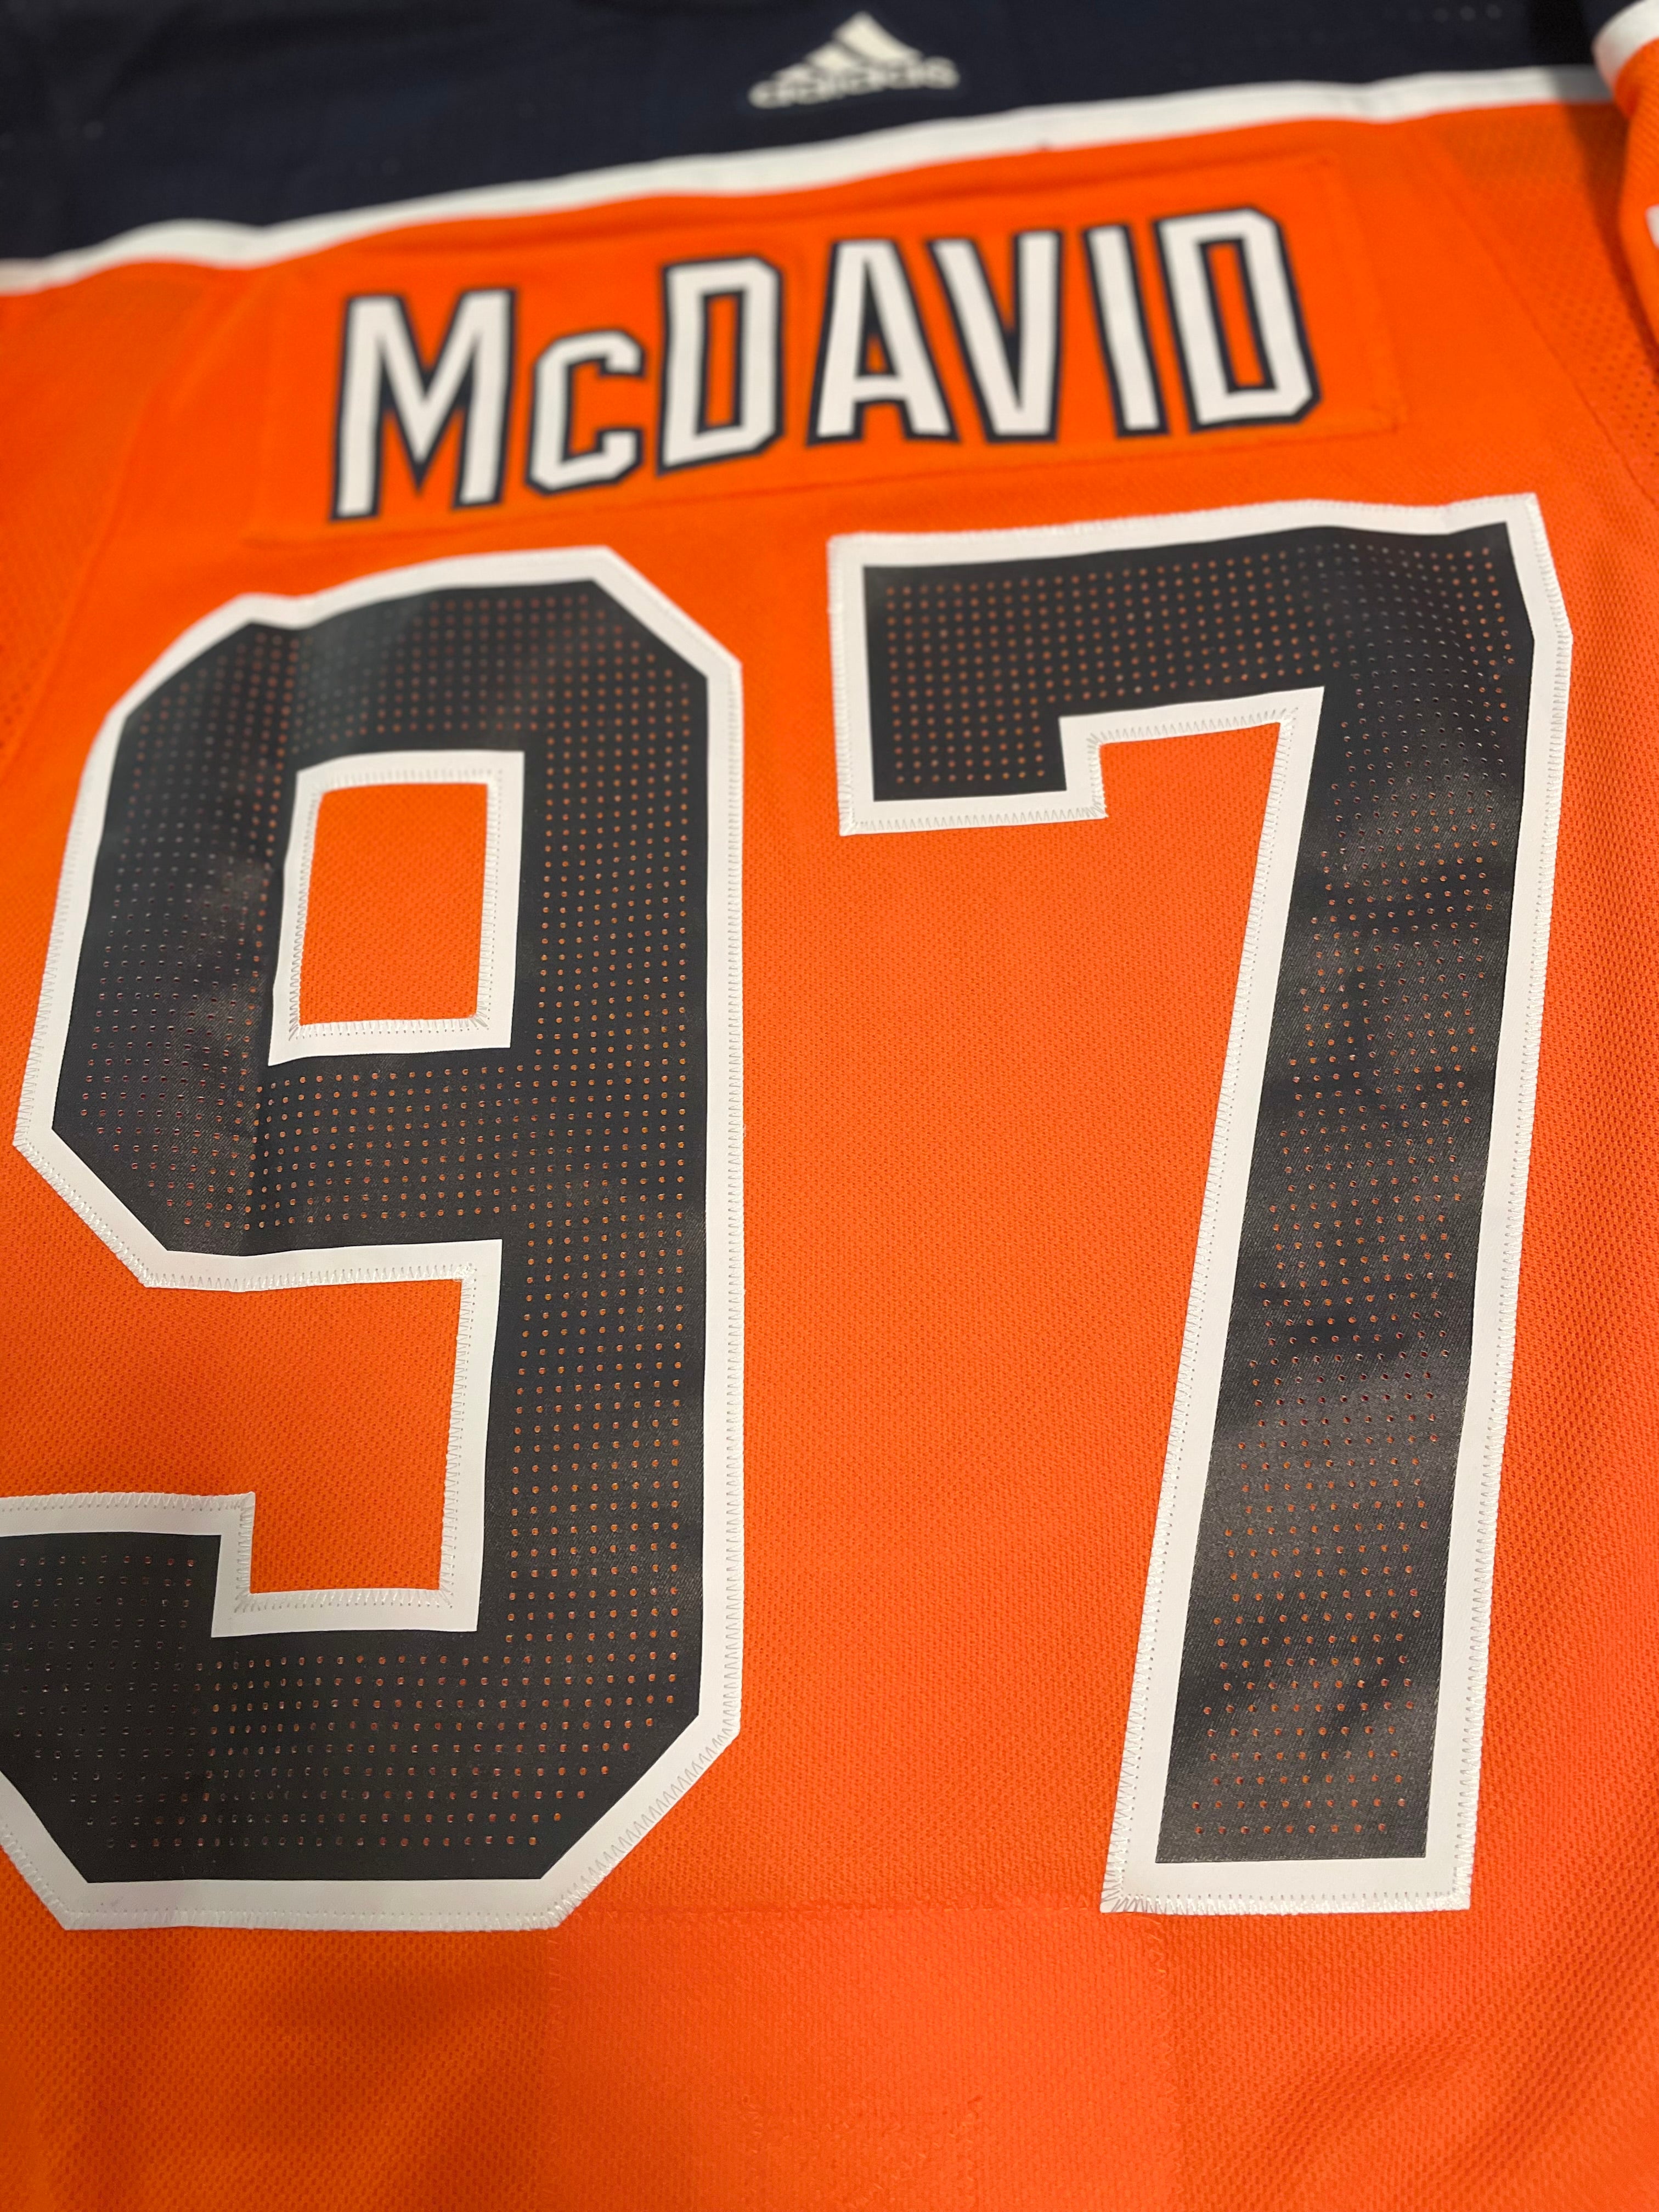 adidas] McDavid Adidas Authentic Hockey Jerseys $126. Other hockey jerseys  for less ($70+) - RedFlagDeals.com Forums